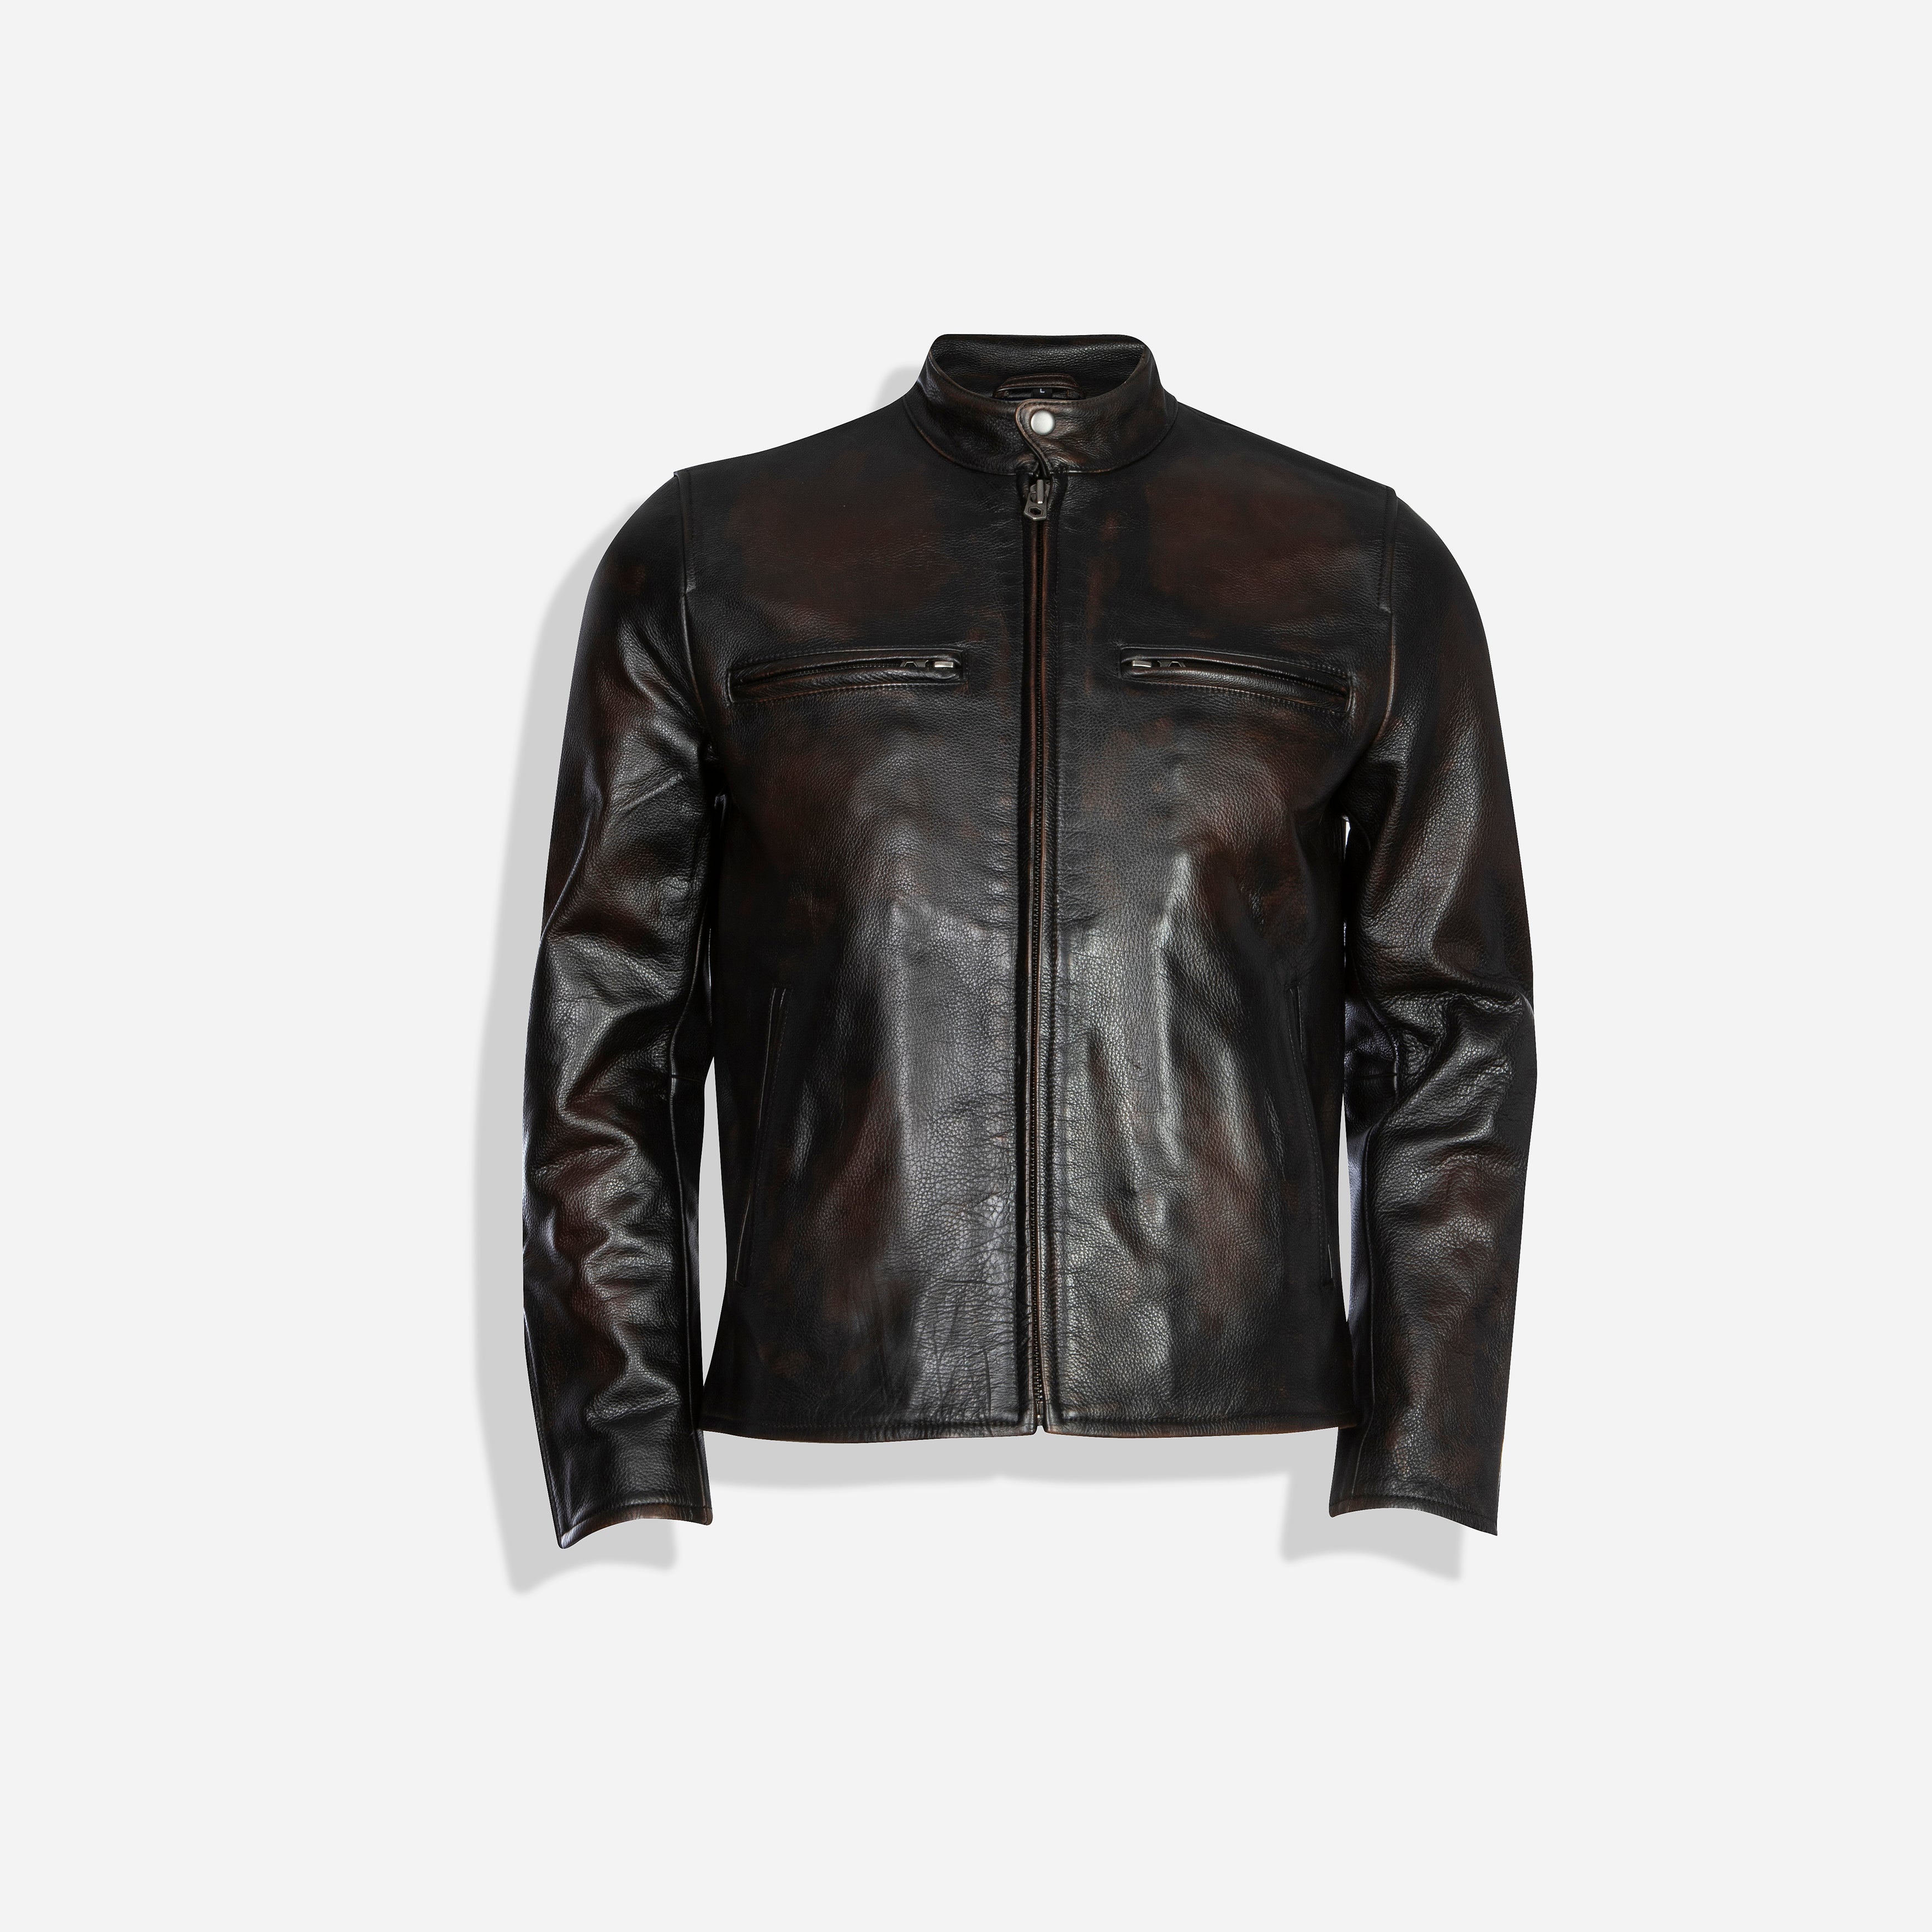 Harley Biker Jacket, Dark Brown